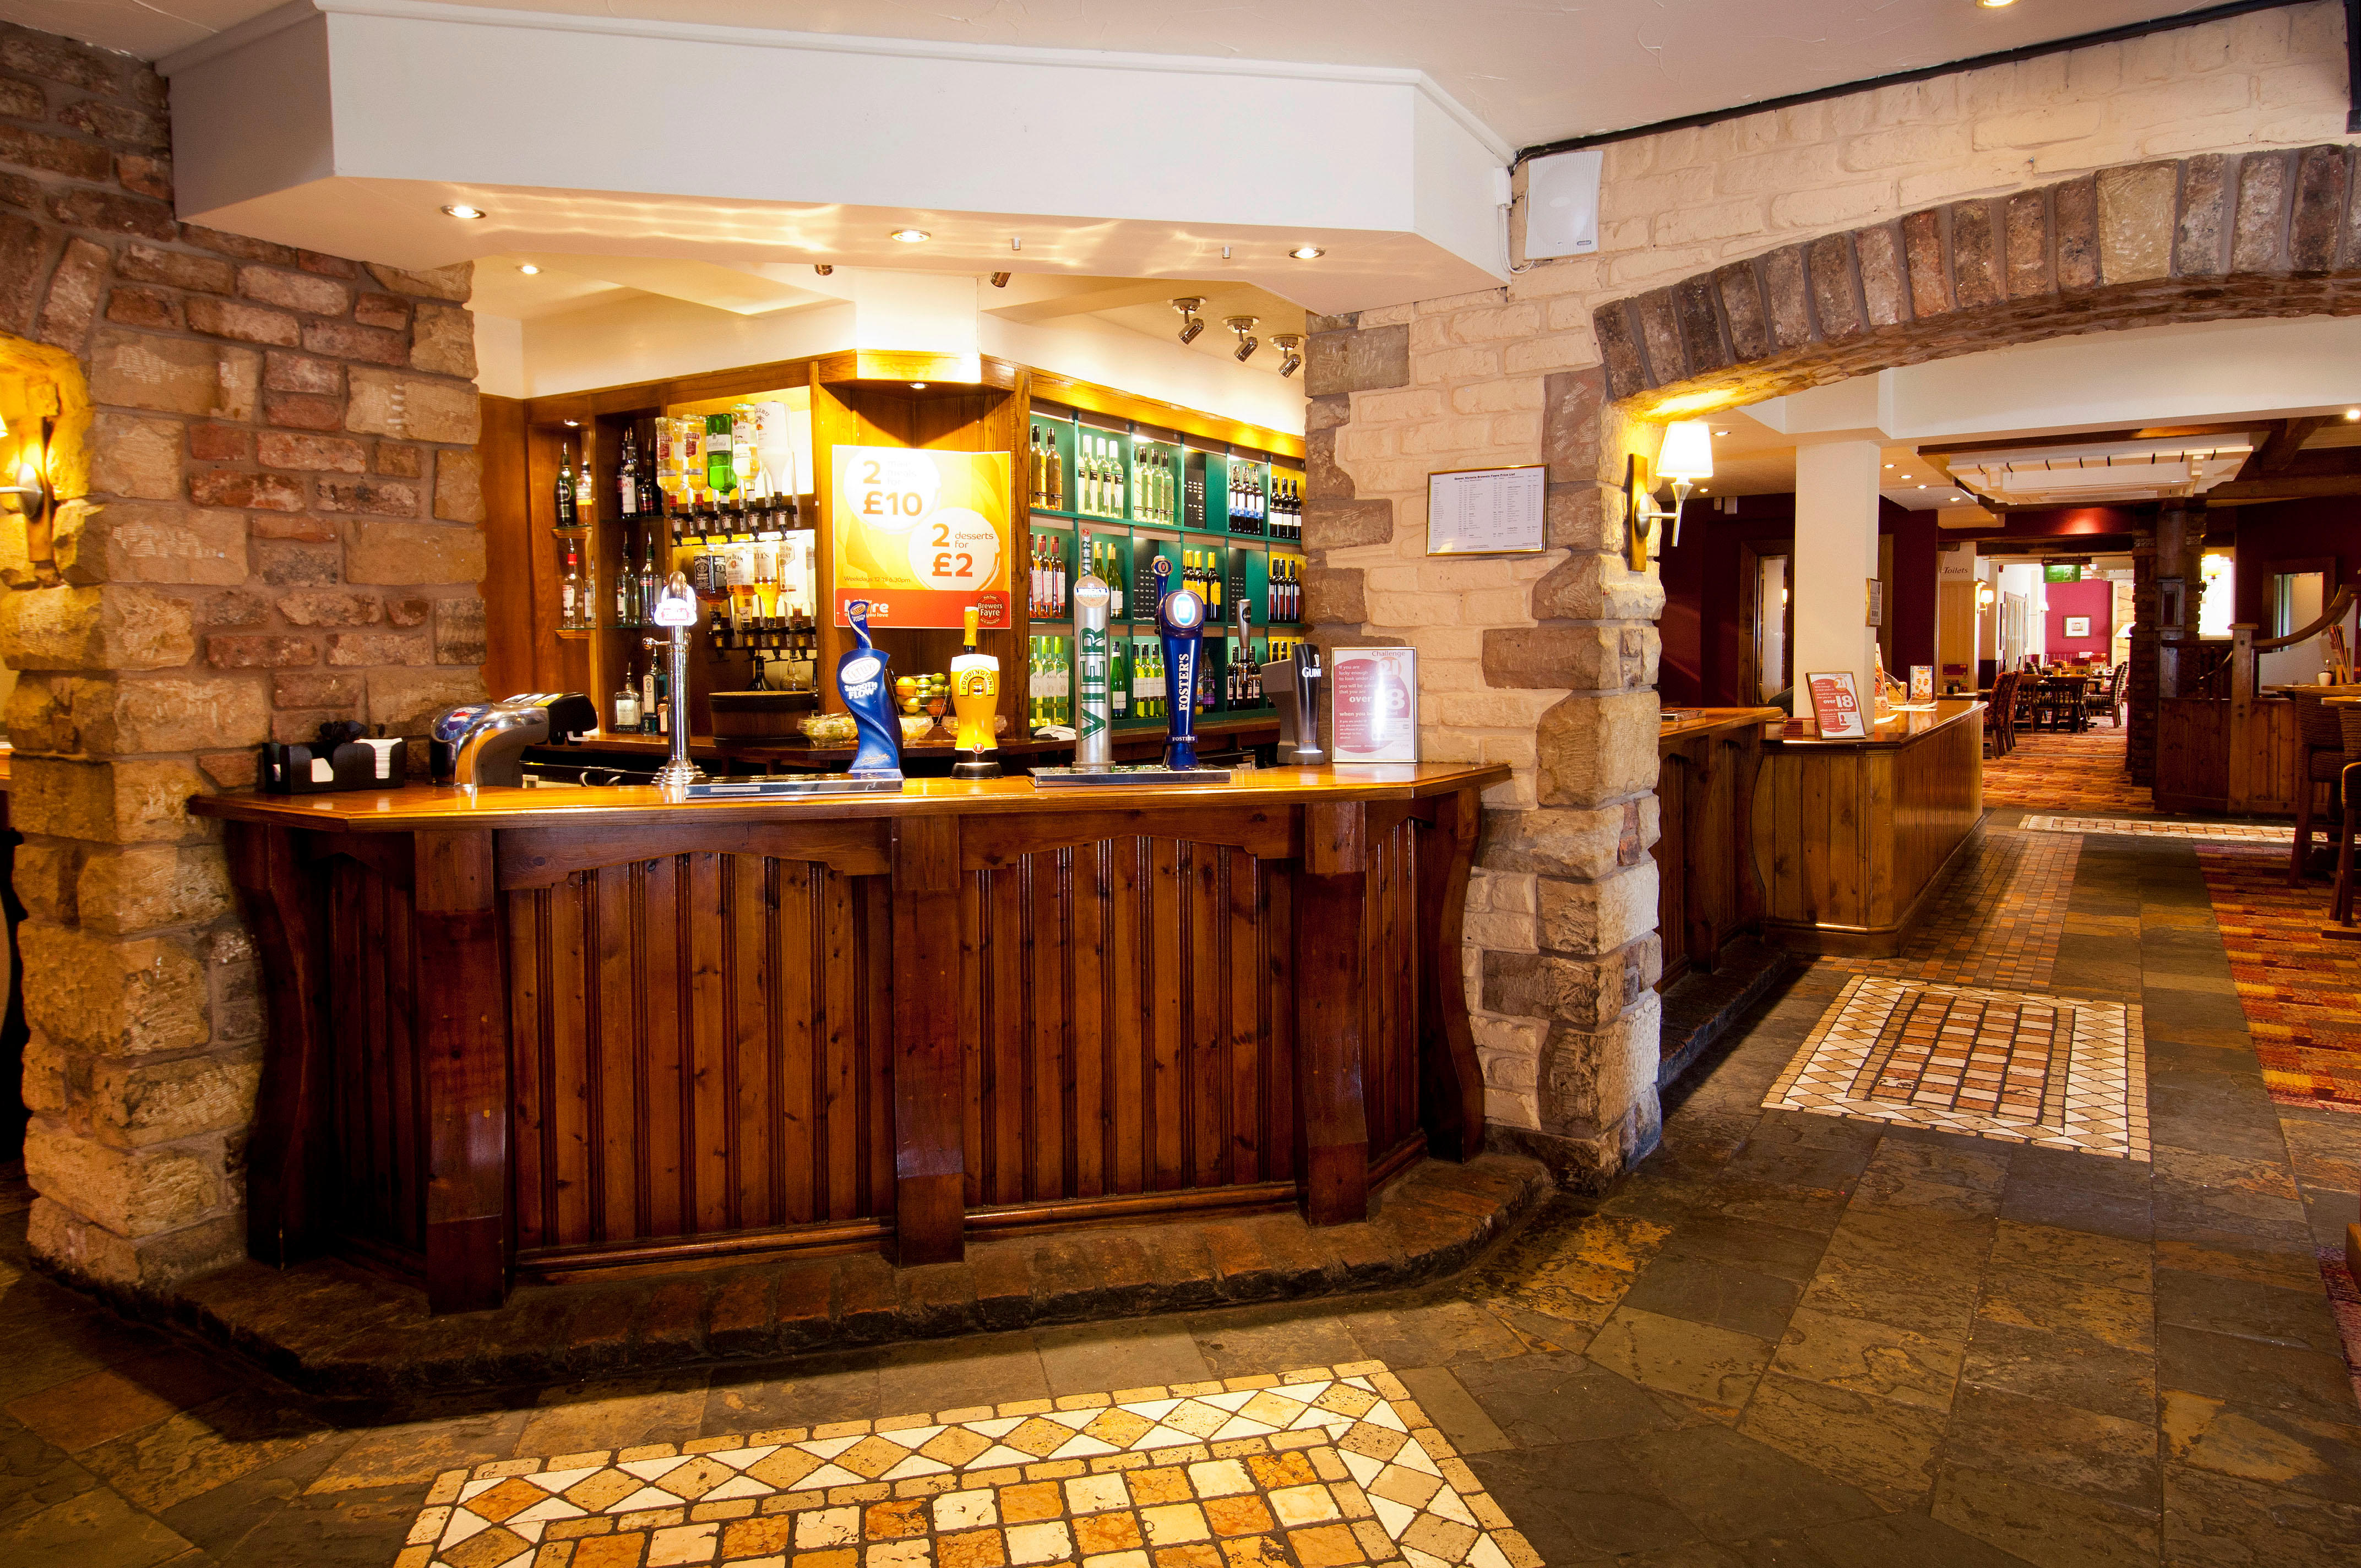 Brewers Fayre restaurant Premier Inn Burnley hotel Burnley 03337 773968